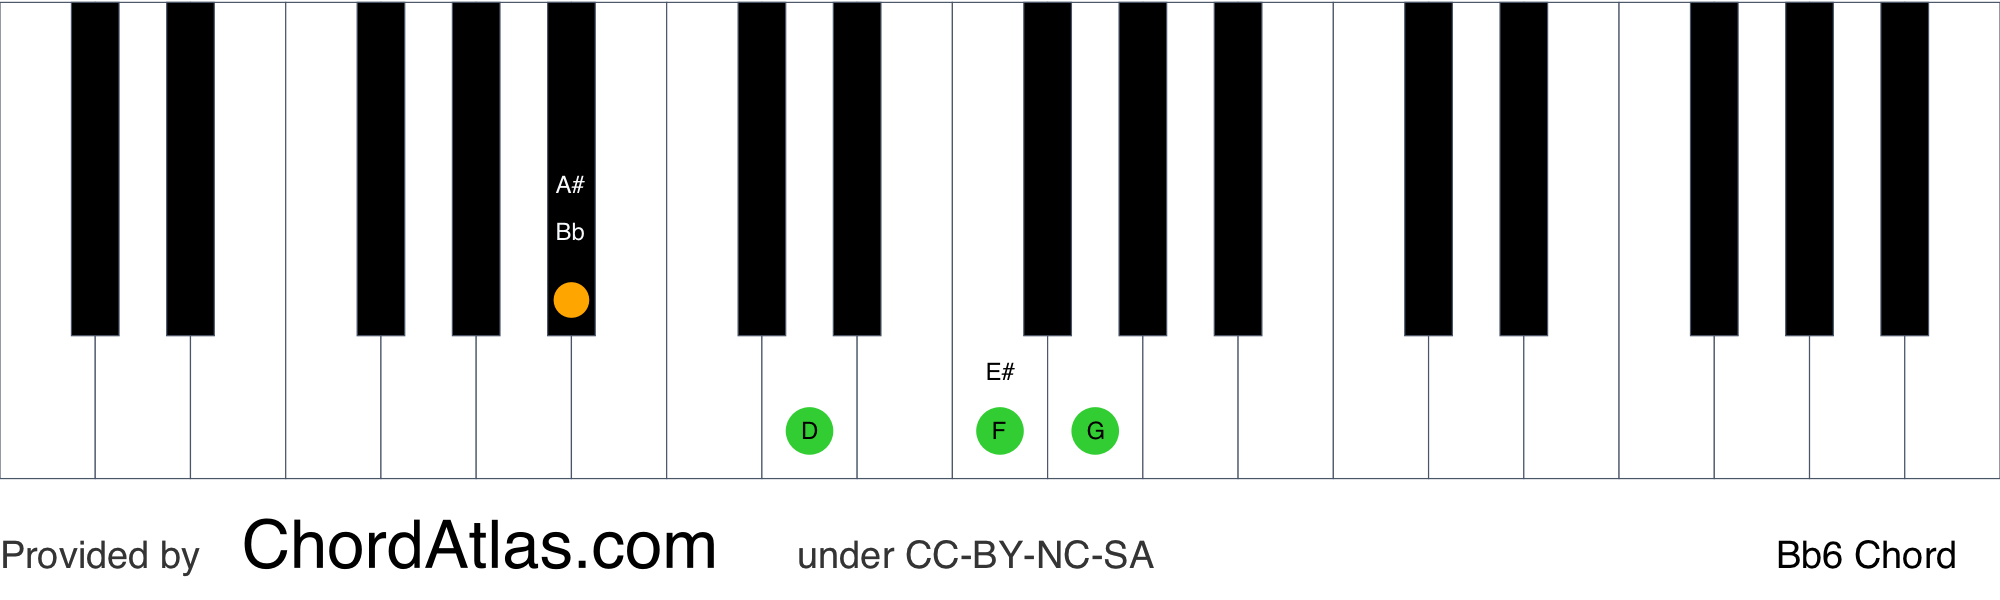 B flat sixth piano chord - Bb6